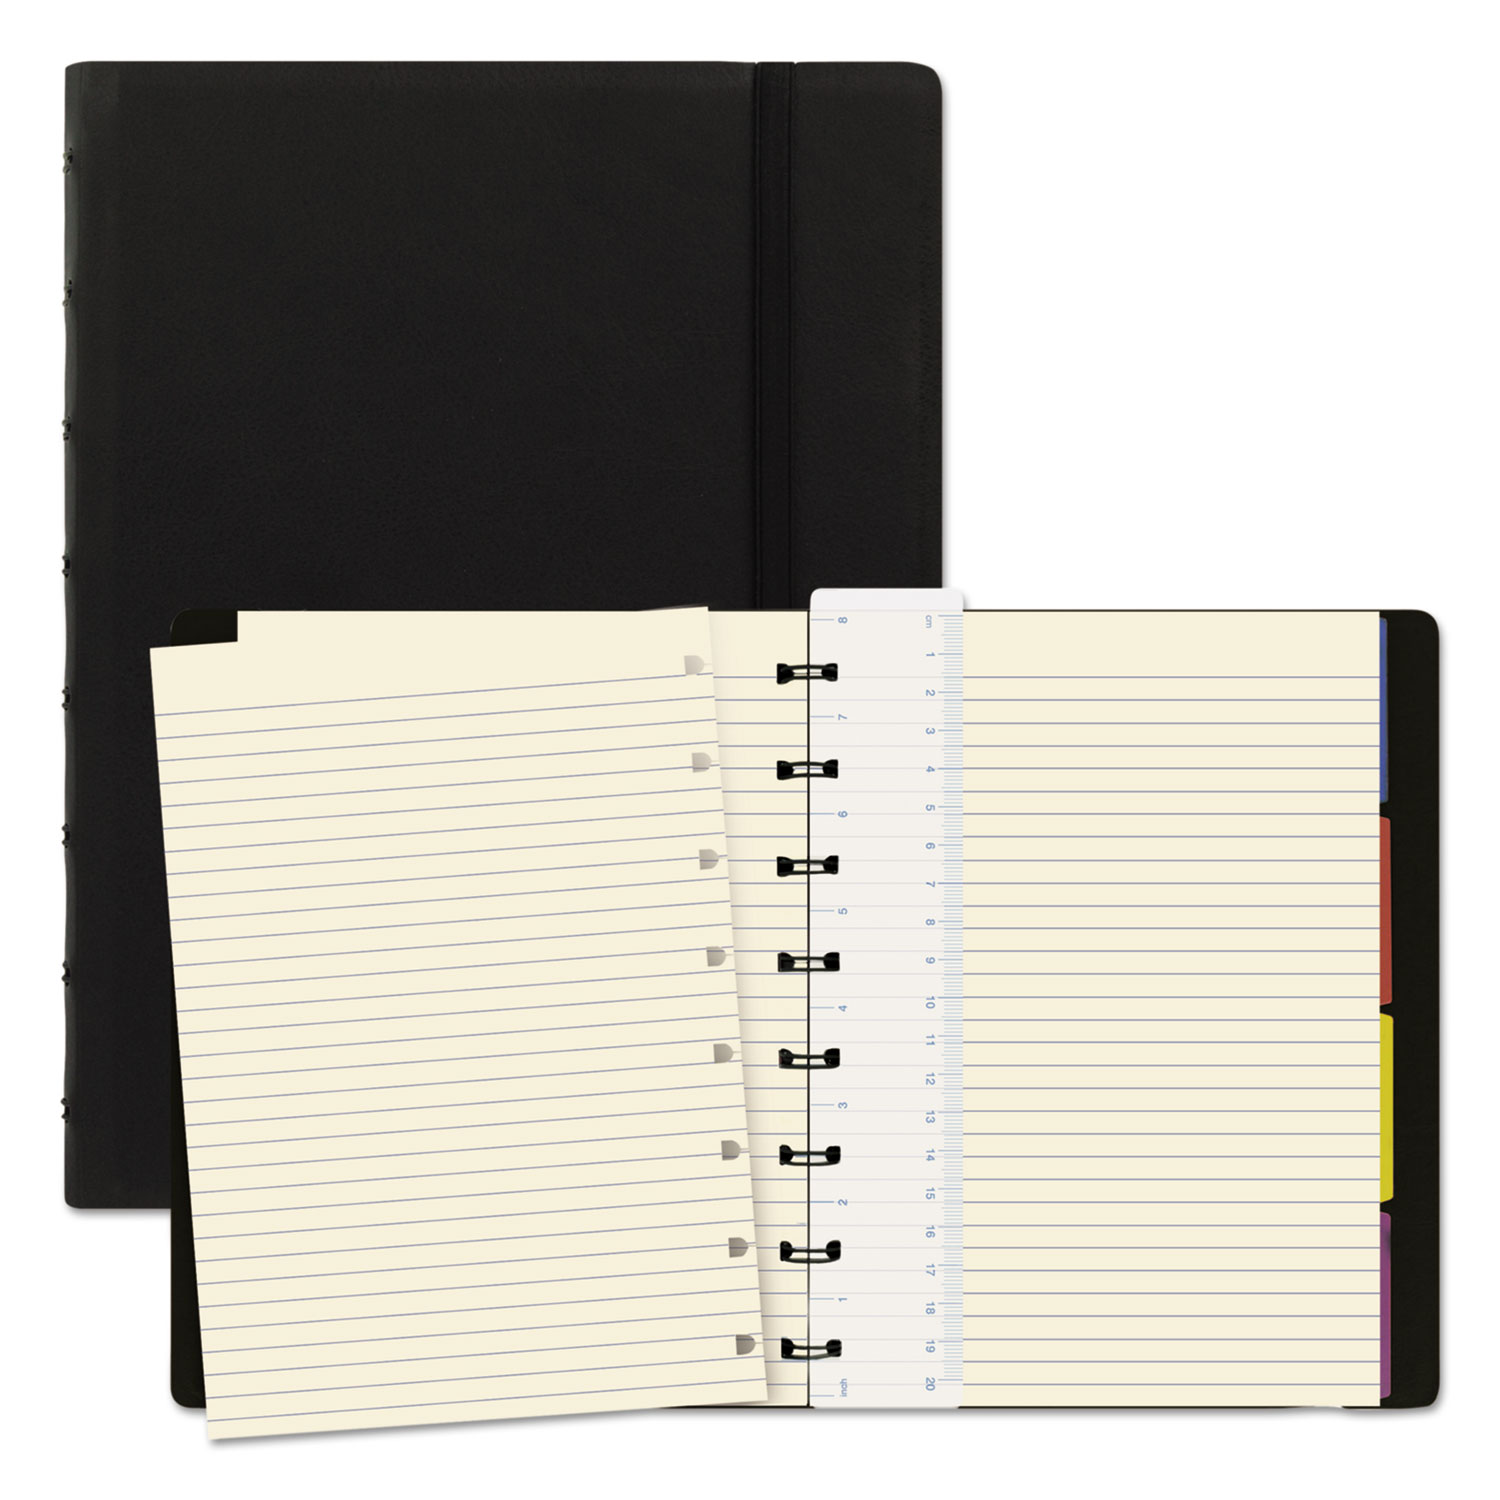  Filofax B115007U Notebook, 1 Subject, Medium/College Rule, Black Cover, 8.25 x 5.81, 112 Sheets (REDB115007U) 